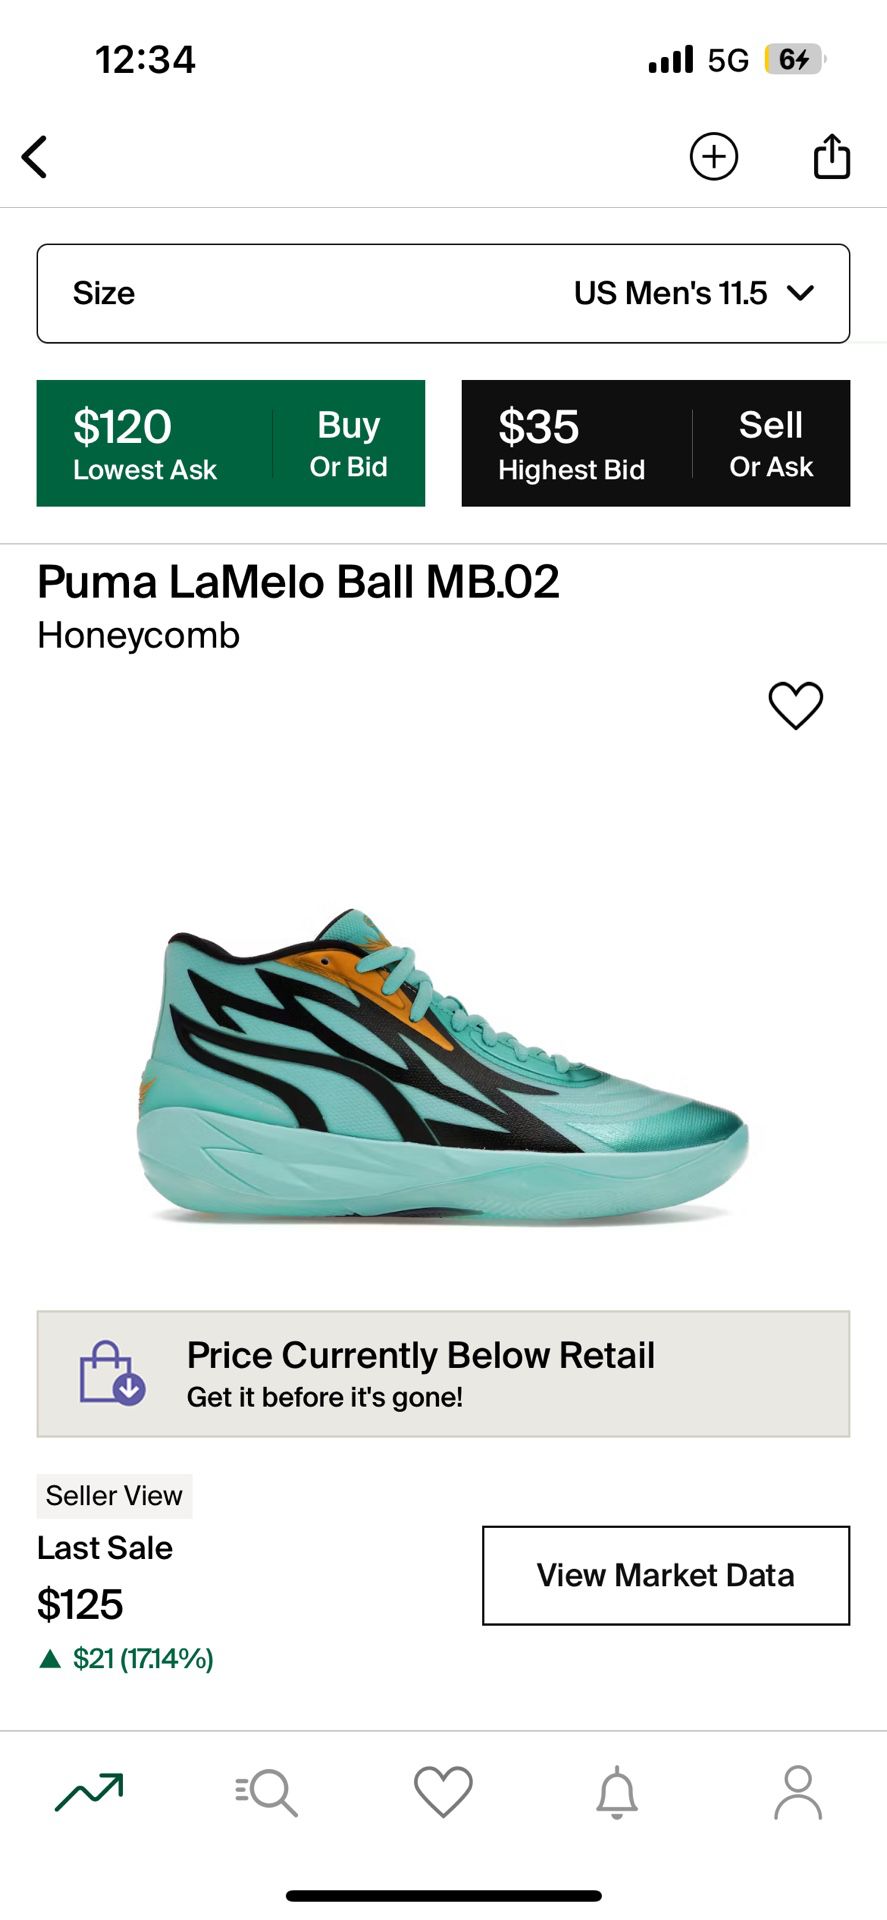 Puma LaMelo Ball MB.02